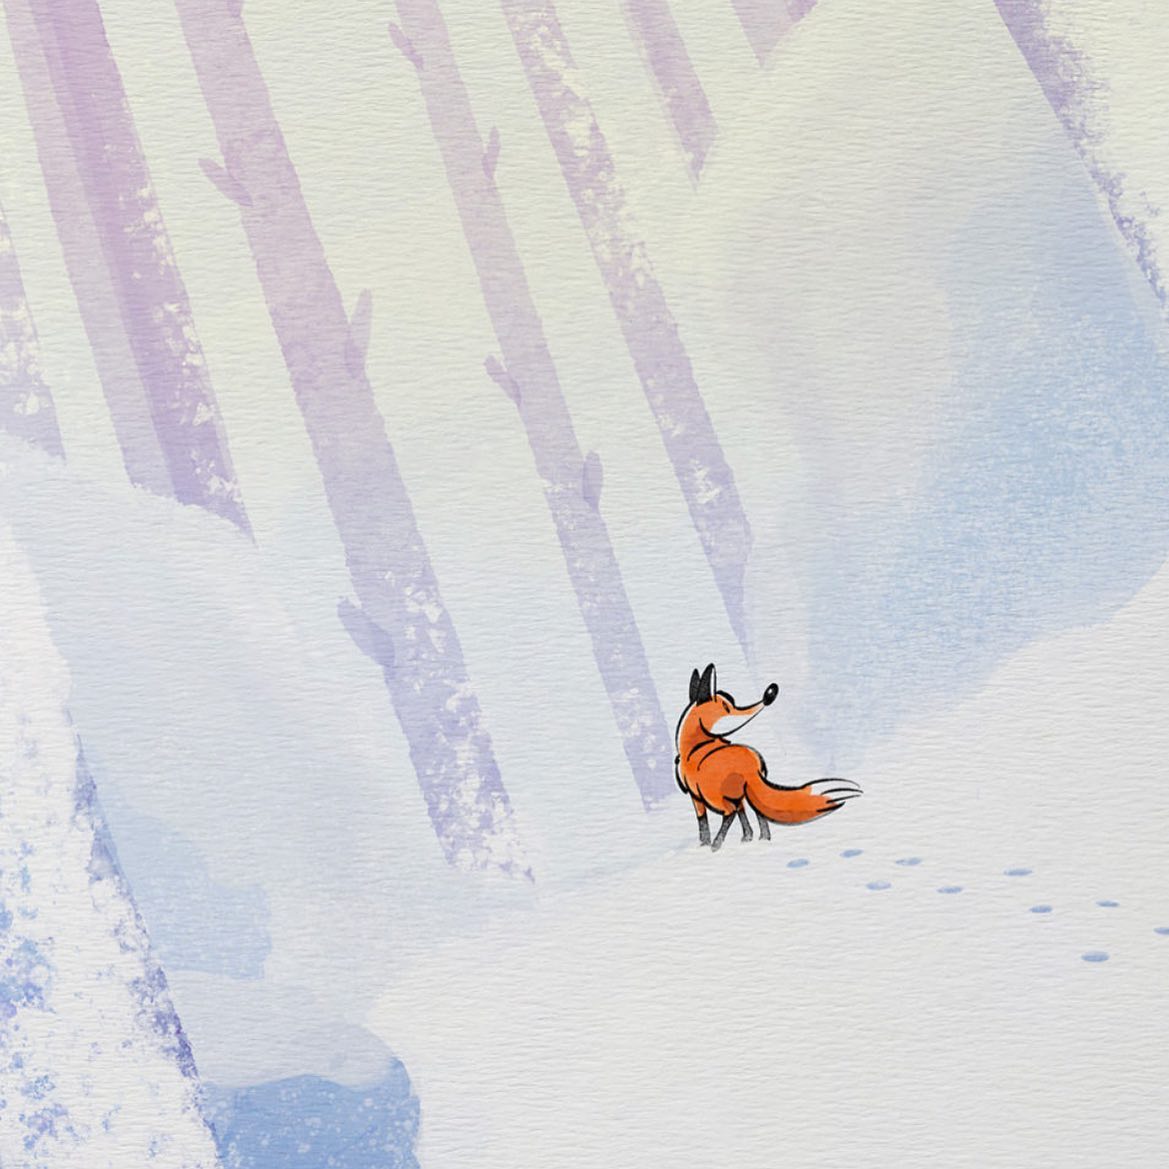 Le Renard d’hiver.
#illustration #renard #fox #winter #dessin #aquarelle #studioalyen #marseille #creation